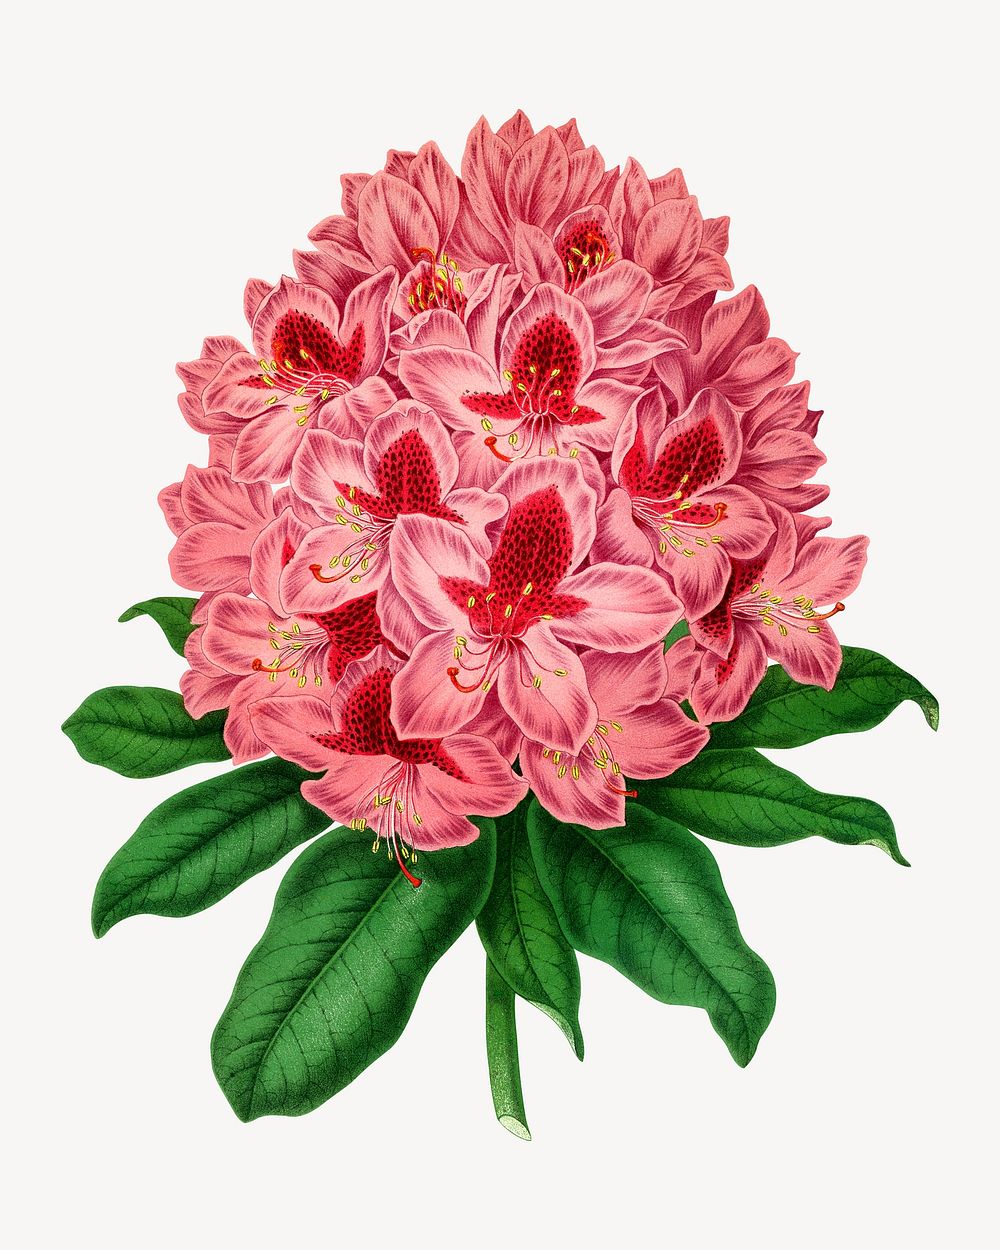 Vintage rhododendron flower illustration. Remixed from our own original 1879 edition of Nederlandsche Flora en Pomona. 